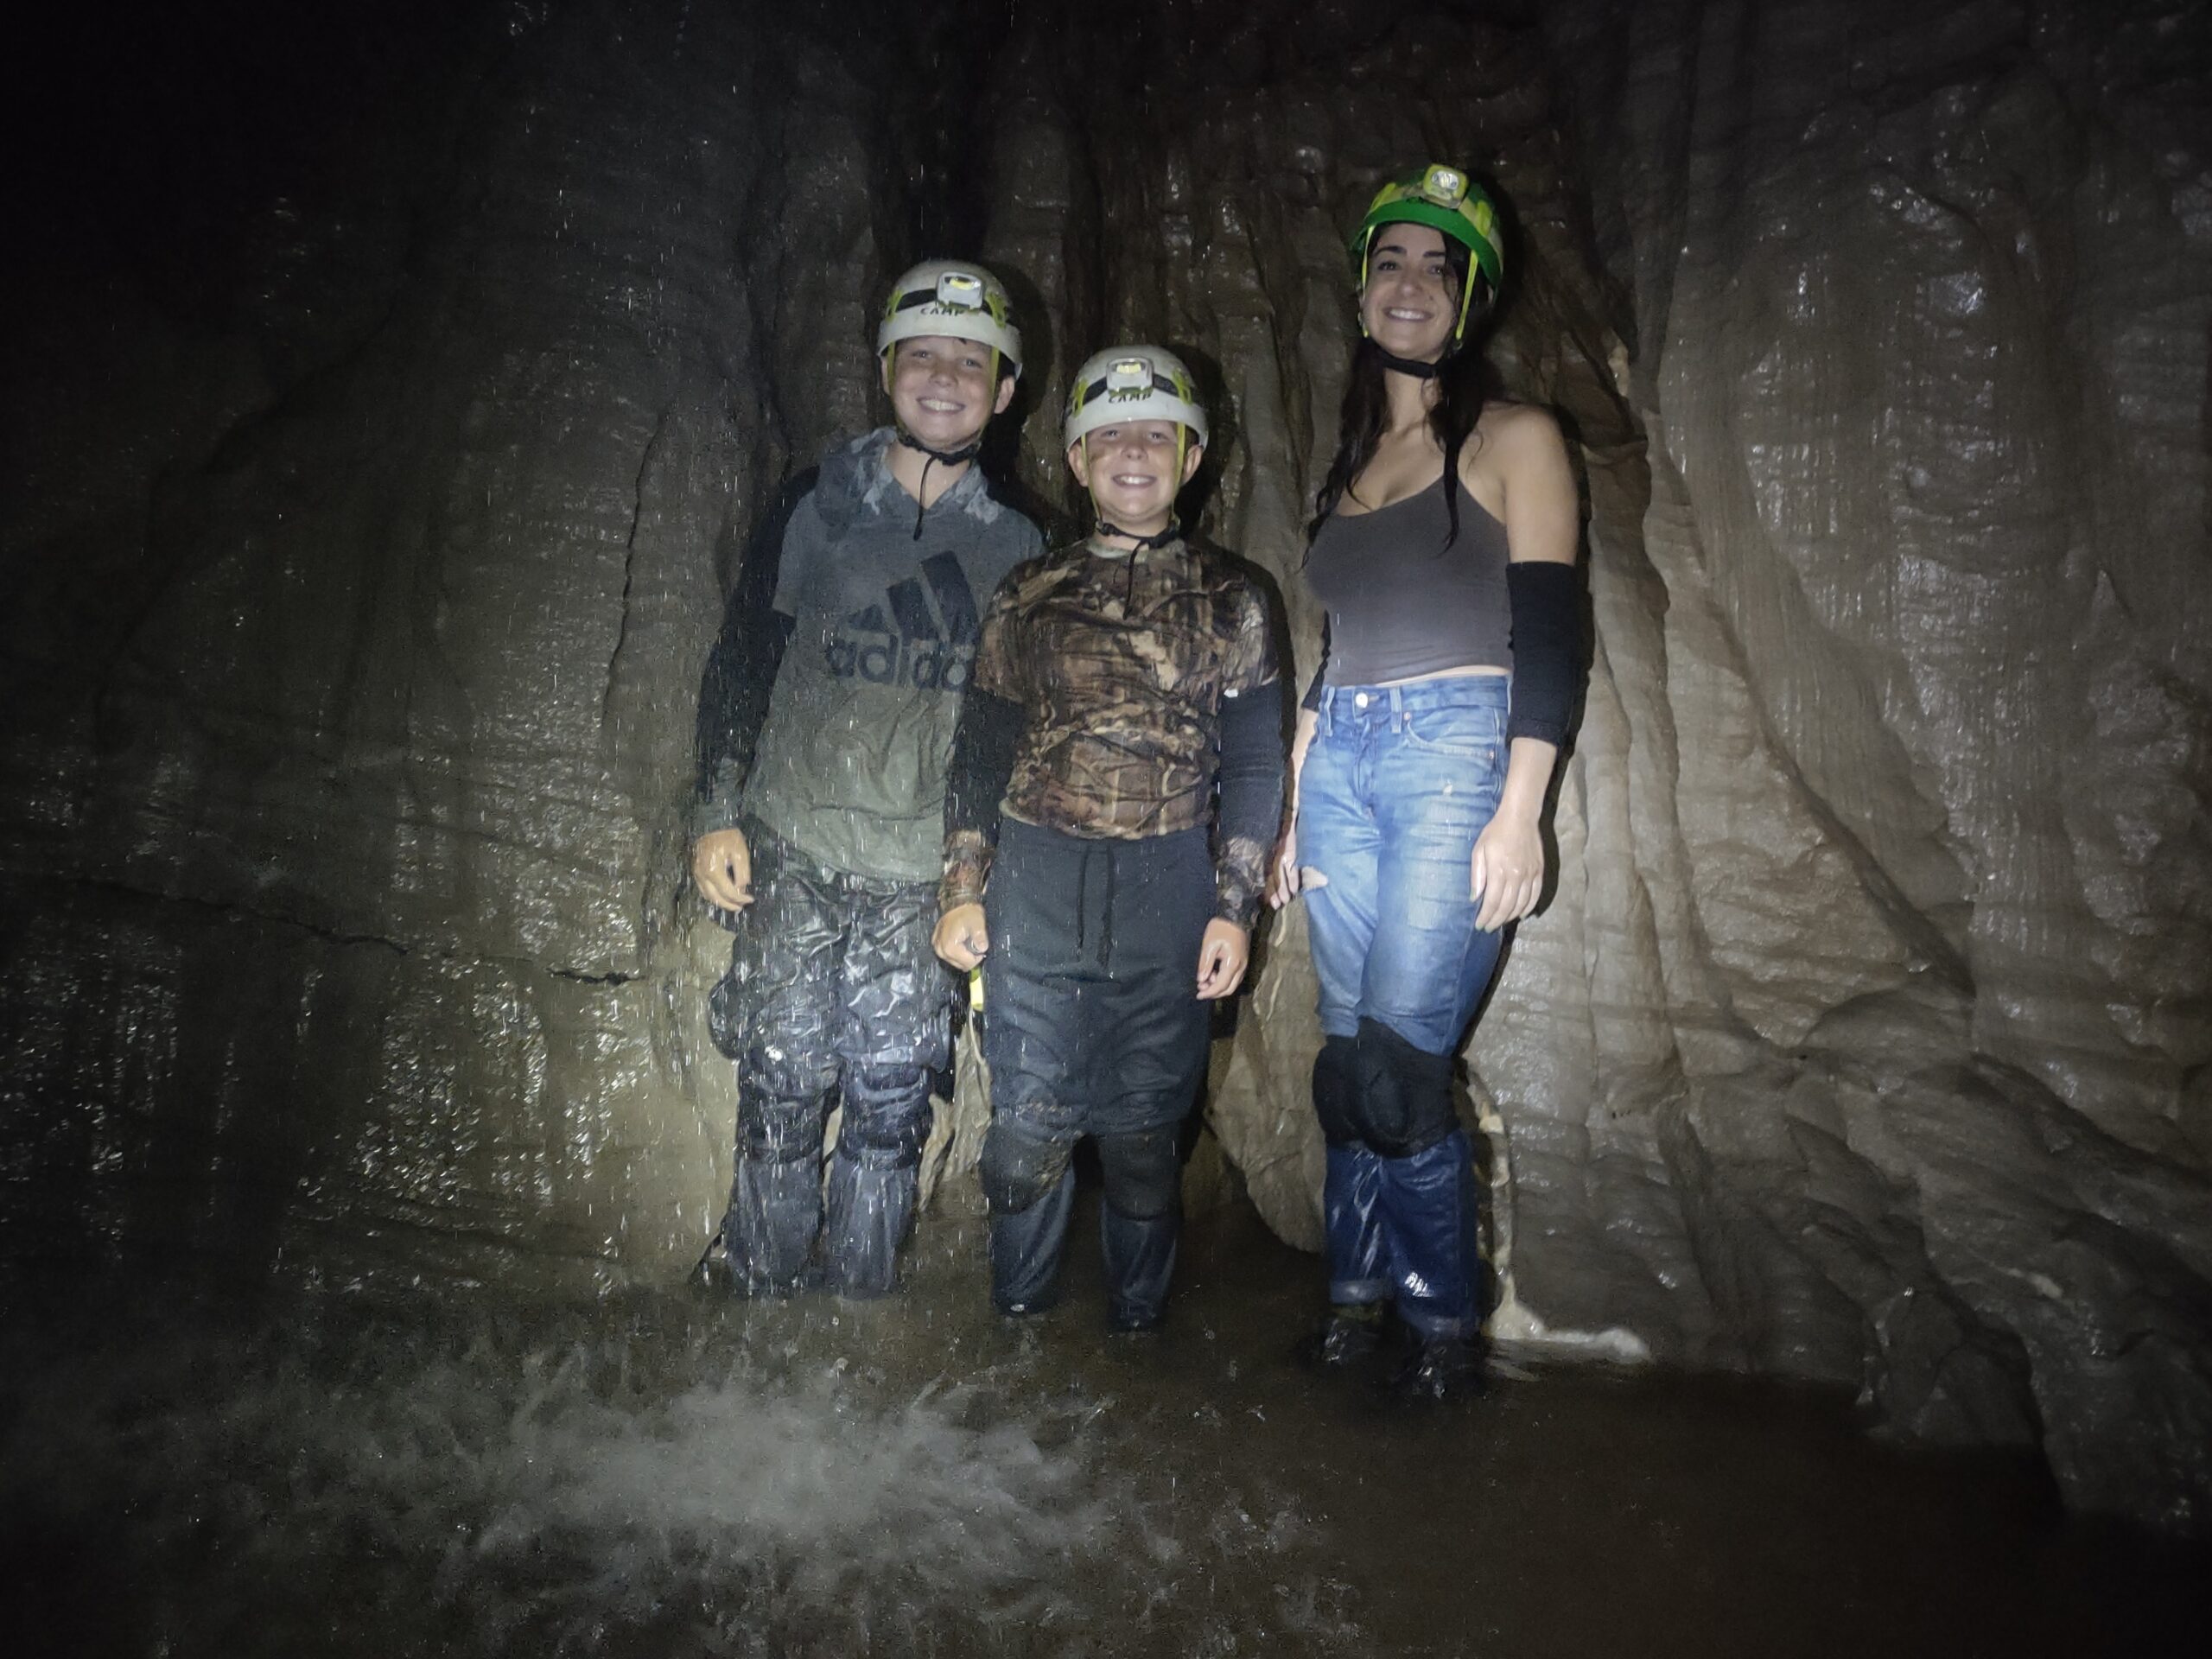 underground waterfall at sims cave park birmingham Alabama Wild Cave Adventure Tour